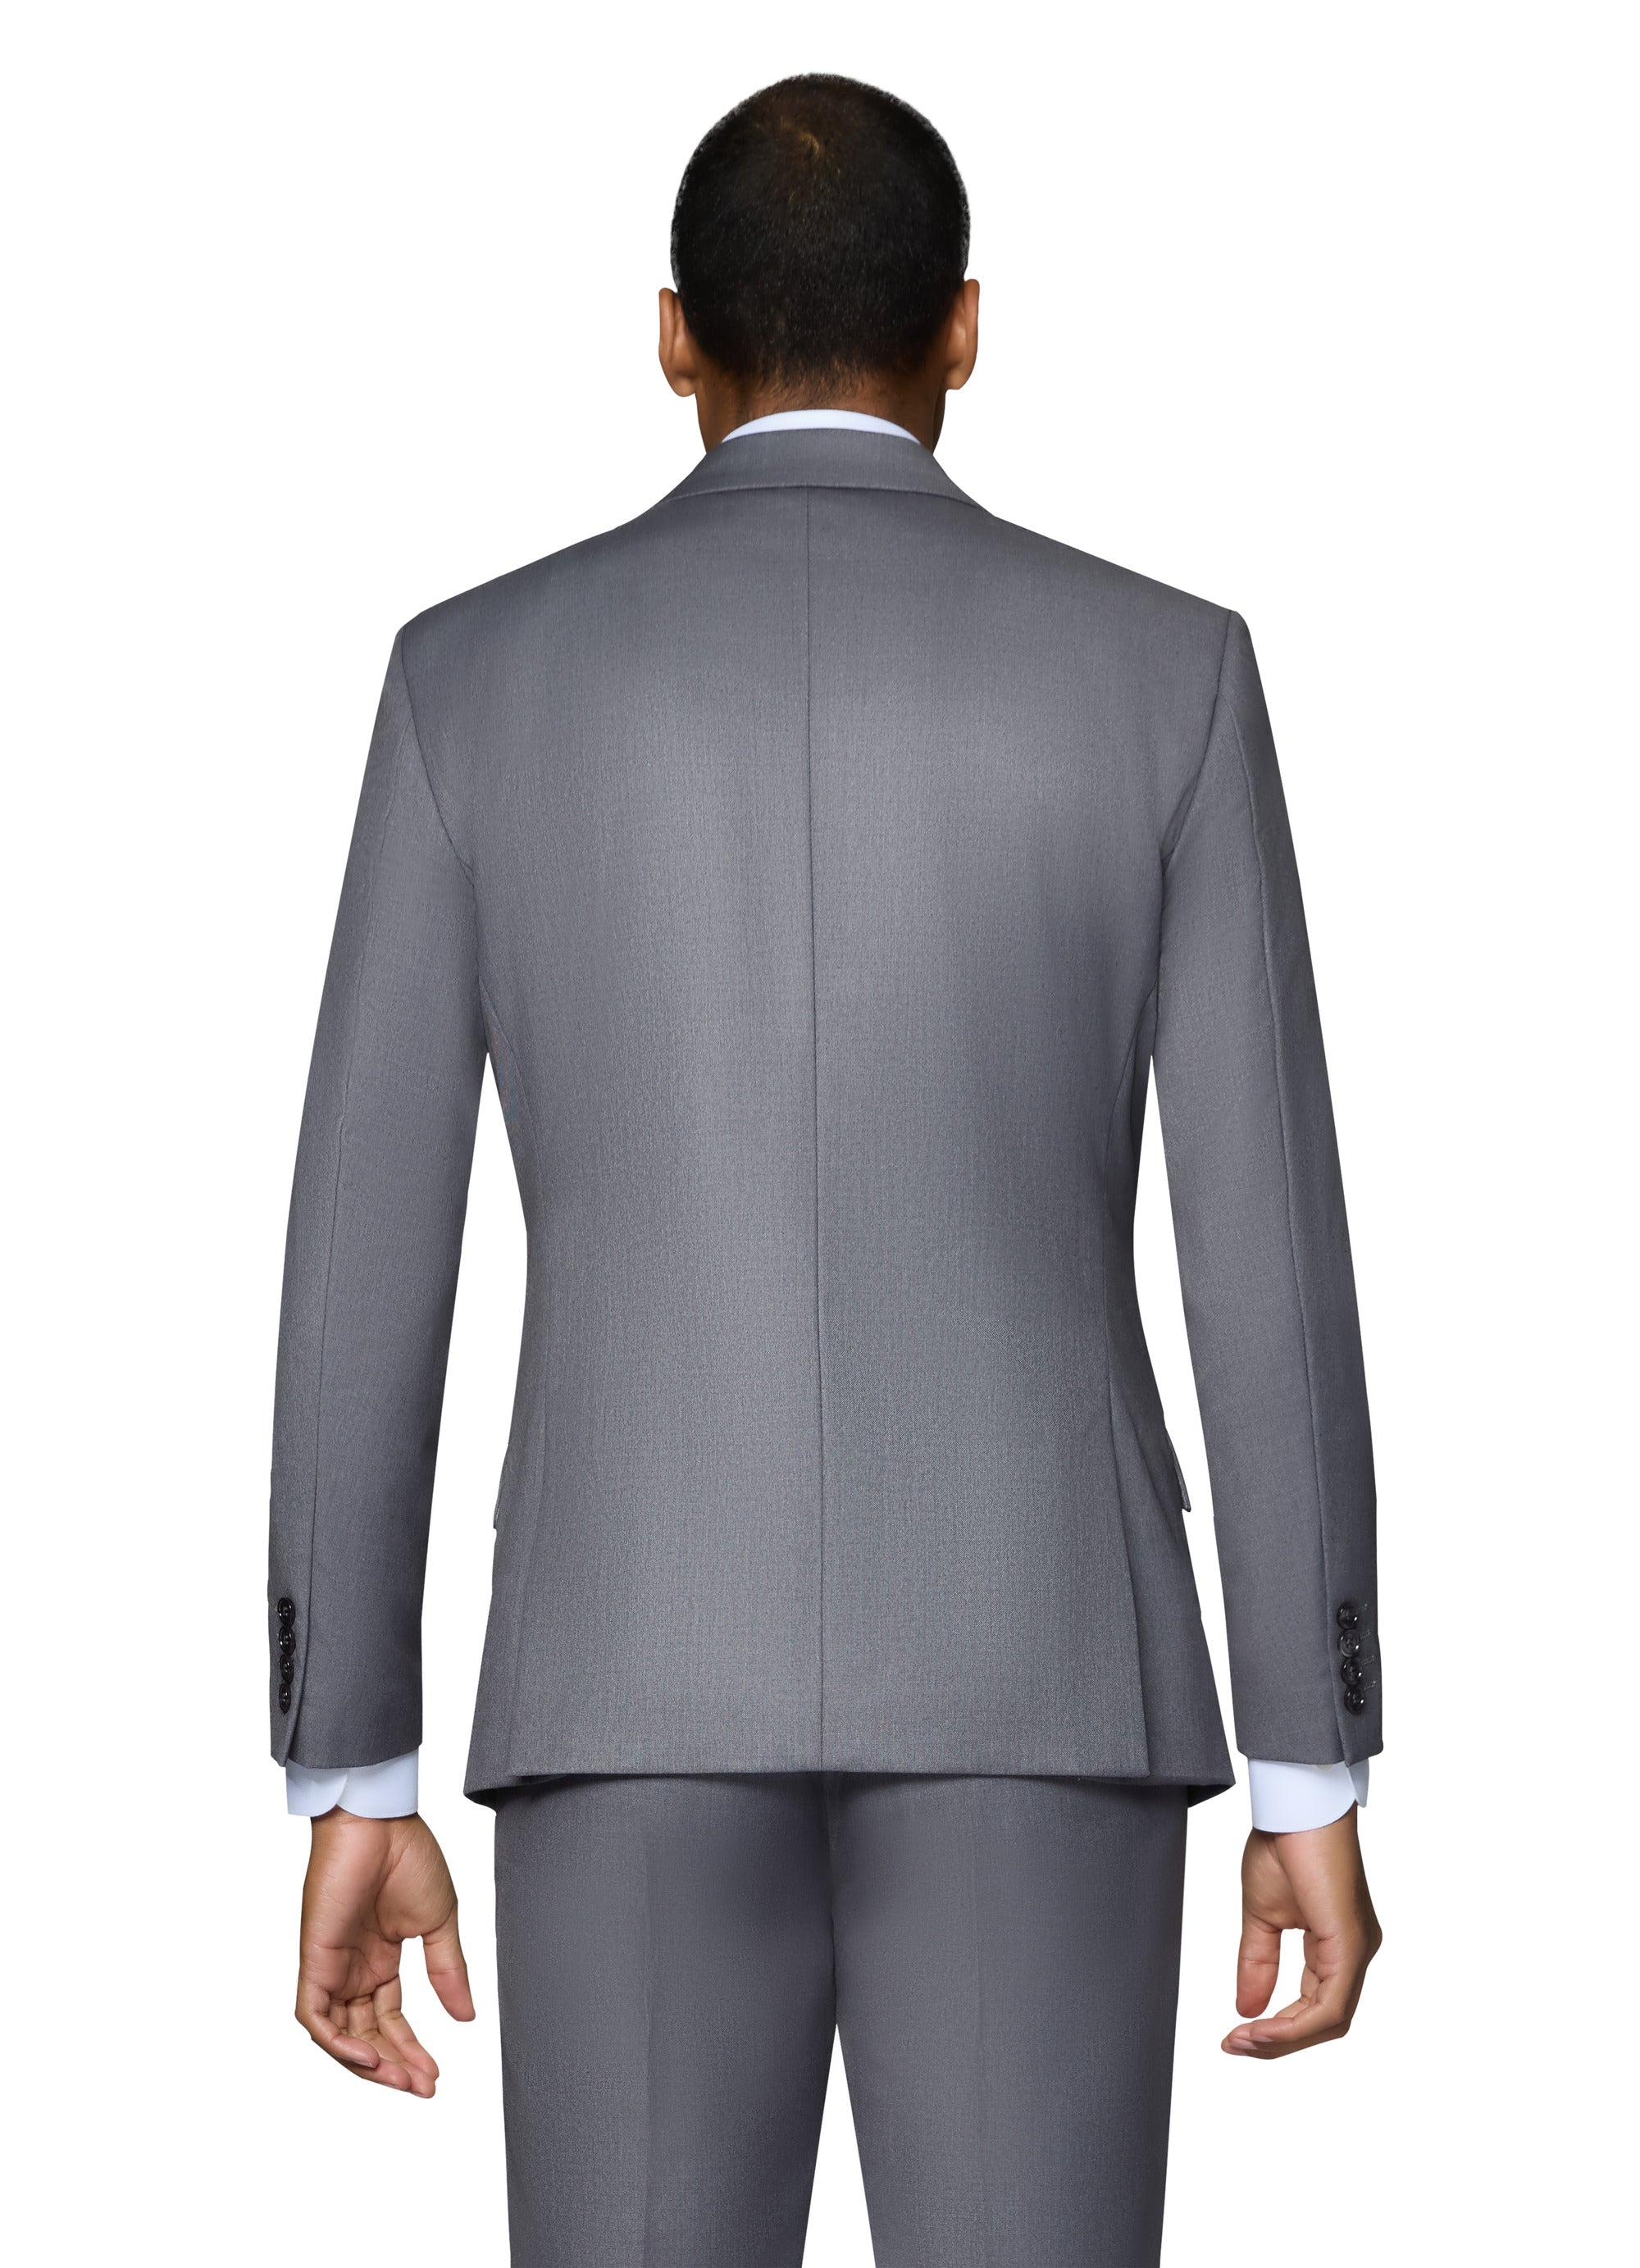 Berragamo Vested Solid Medium Grey Modern Fit